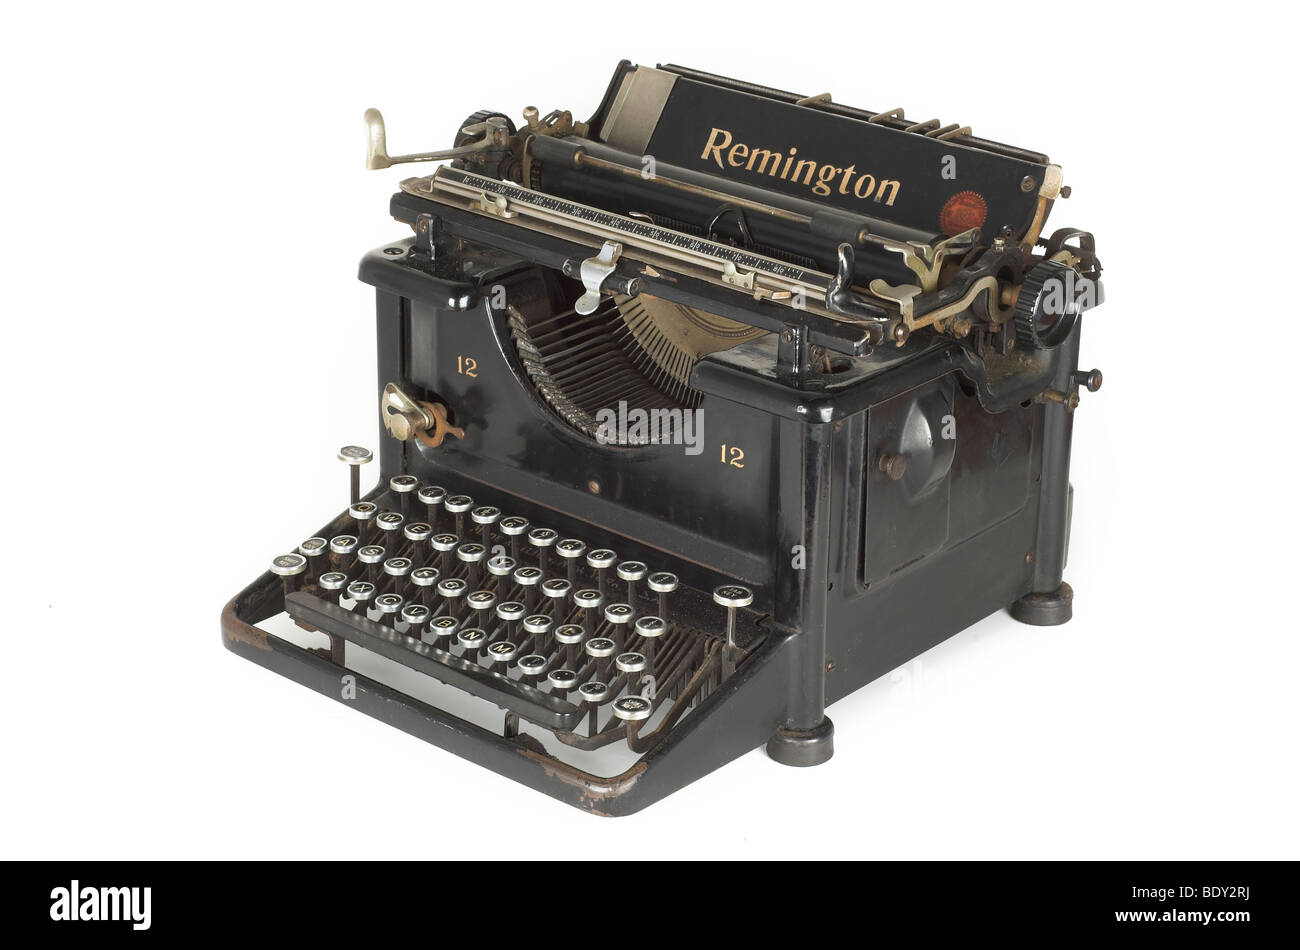 An old 1930's 1940's Remmington Typewriter Stock Photo